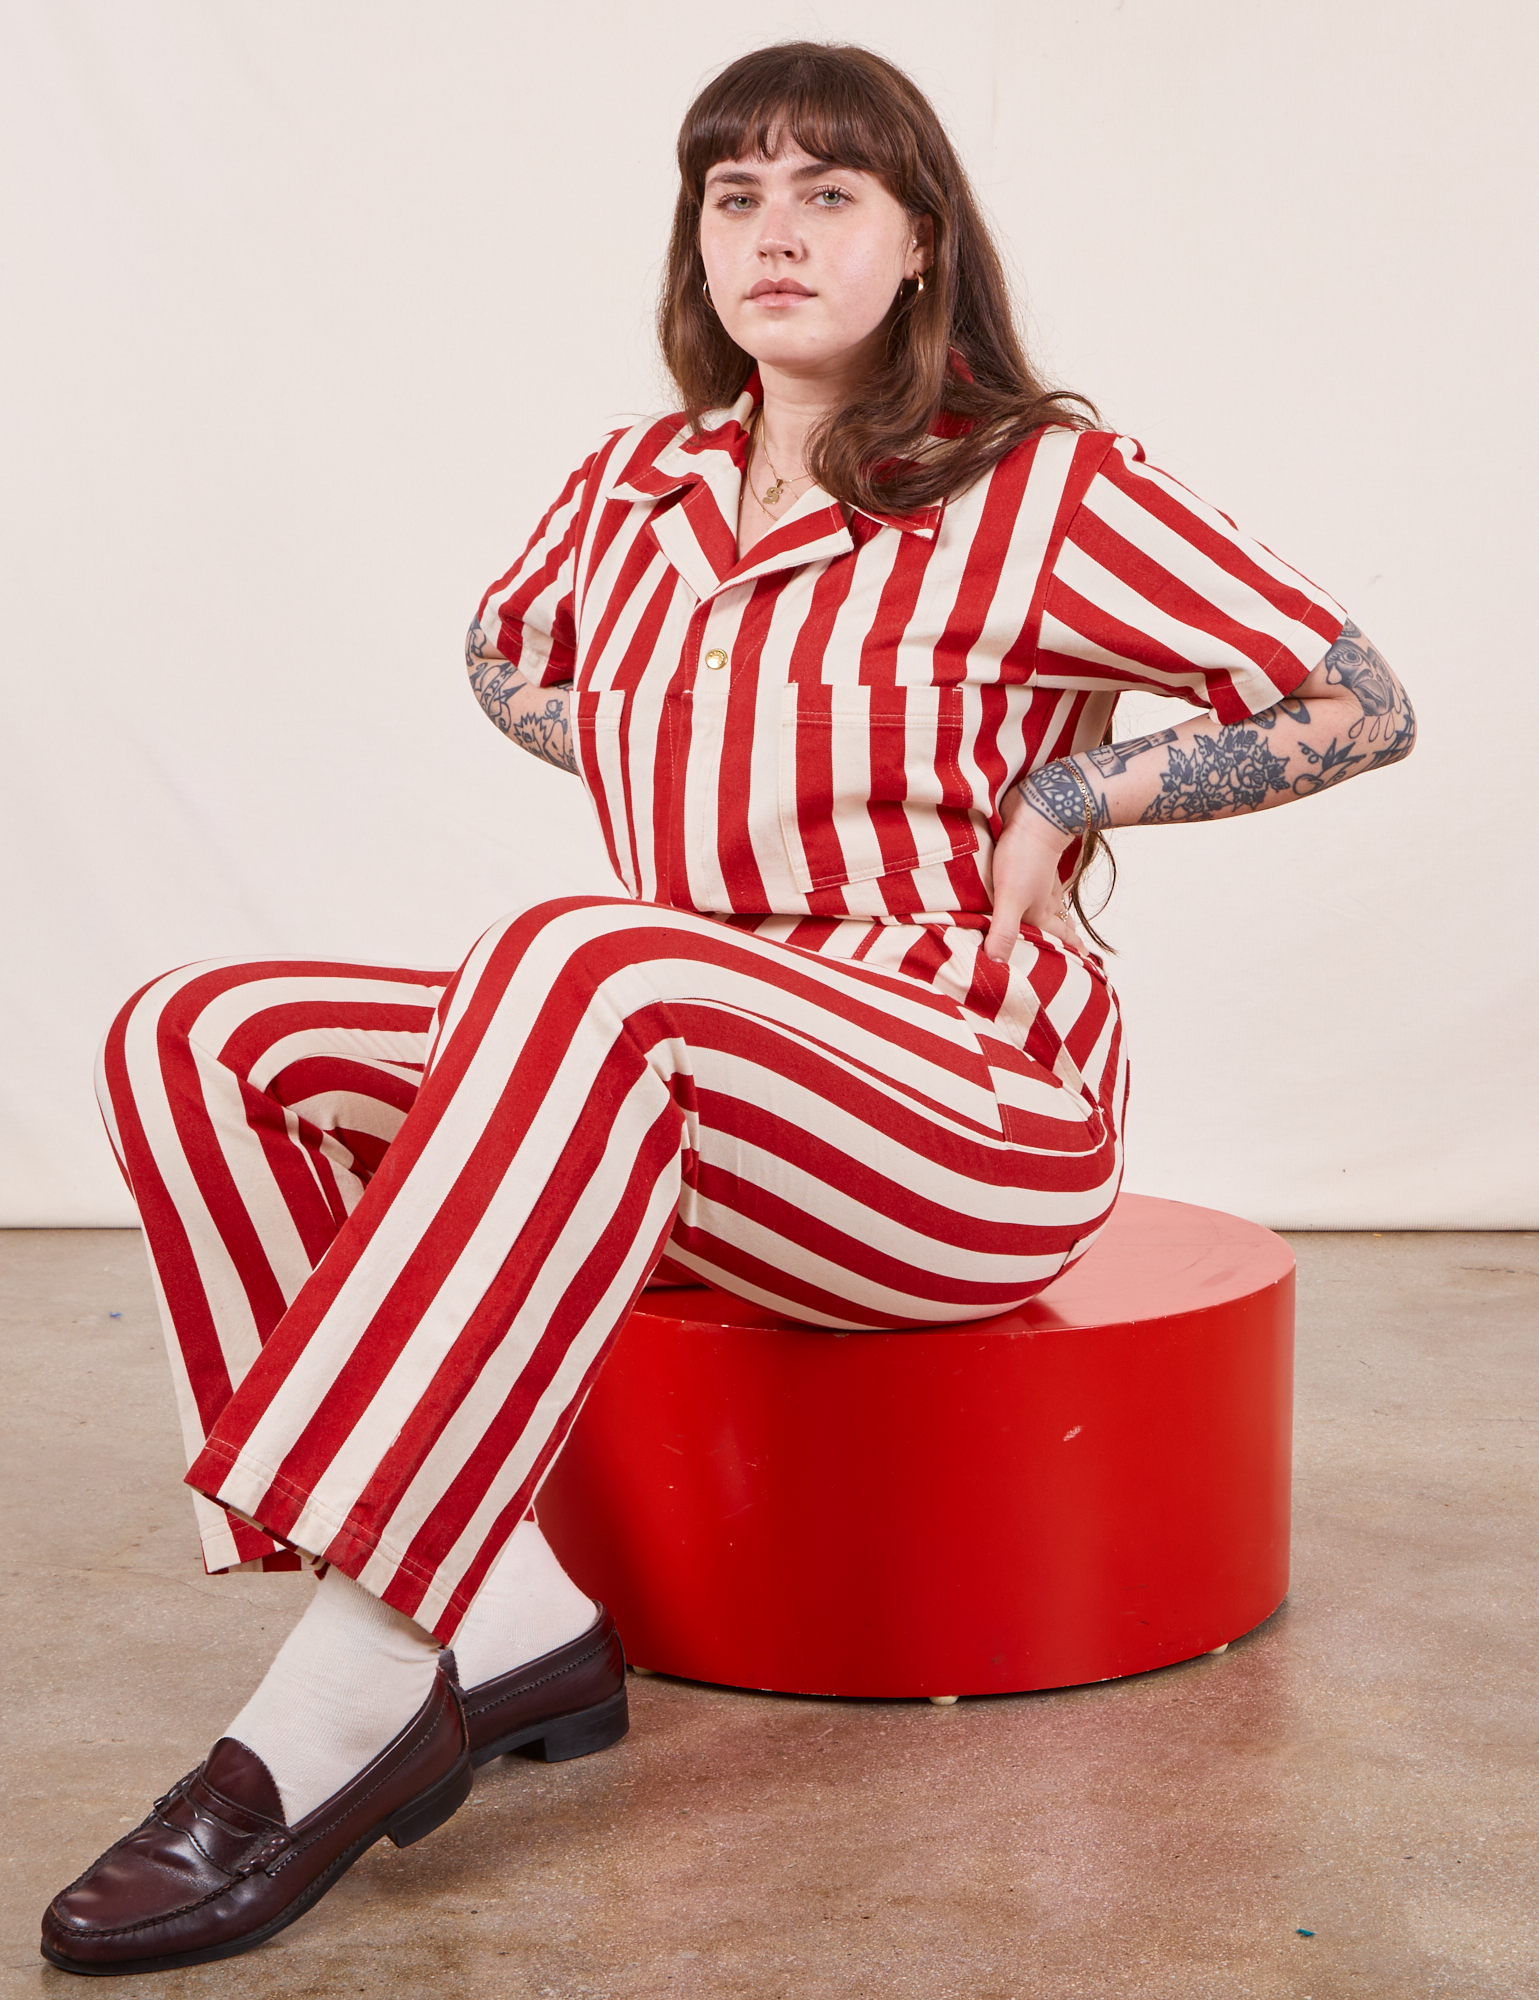 Sydney is wearing Cherry Stripe Jumpsuit sitting on a red circular platform